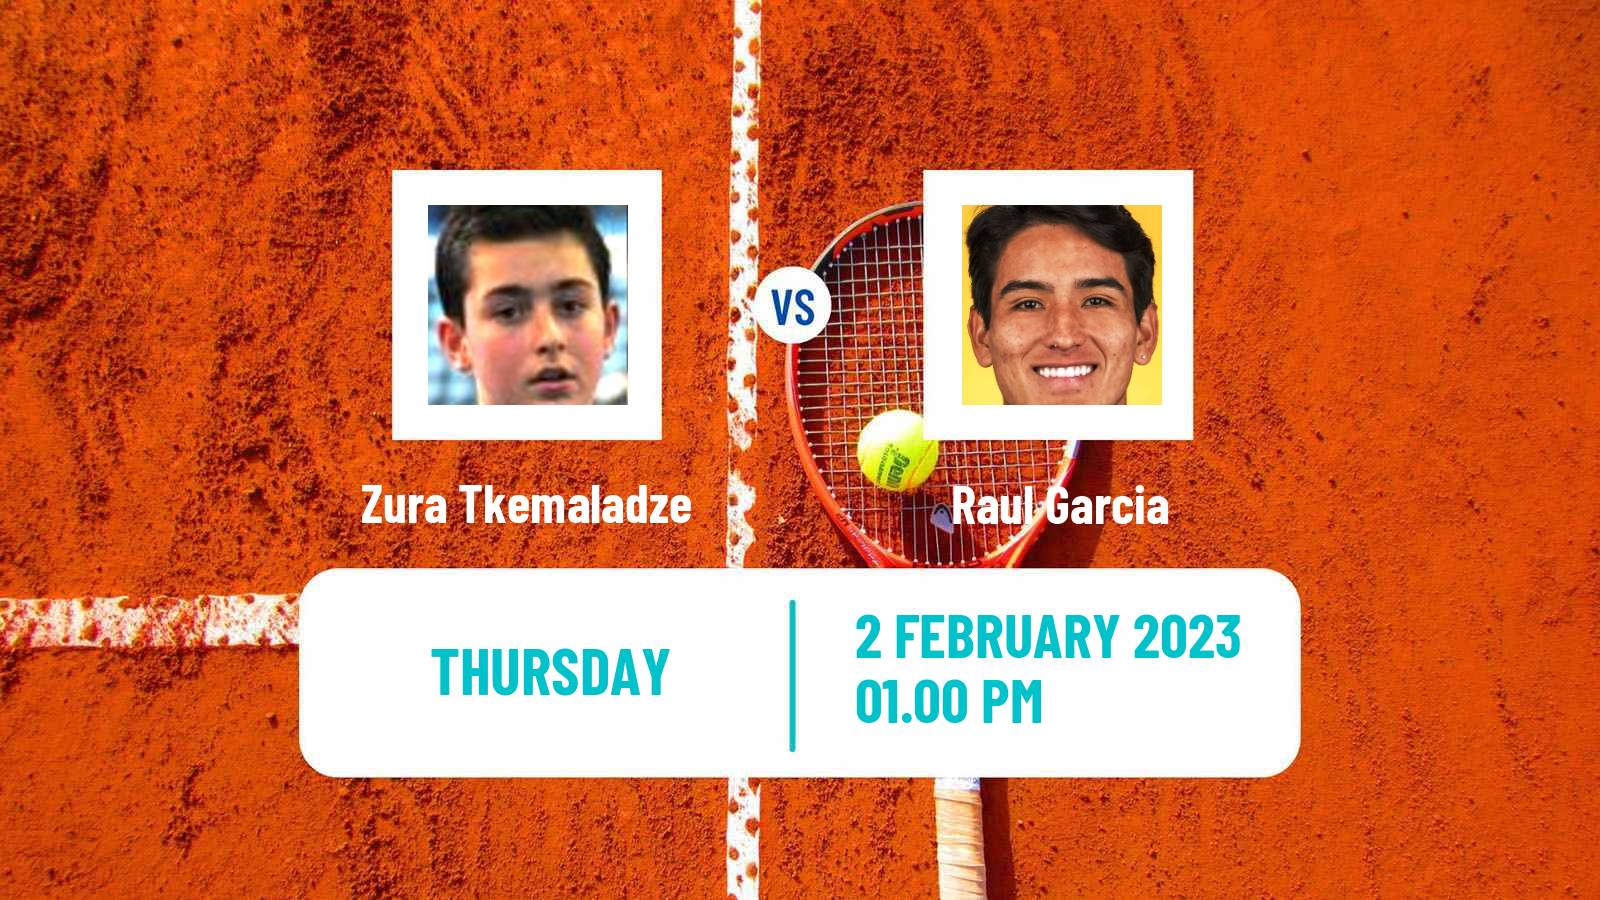 Tennis Davis Cup World Group II Zura Tkemaladze - Raul Garcia